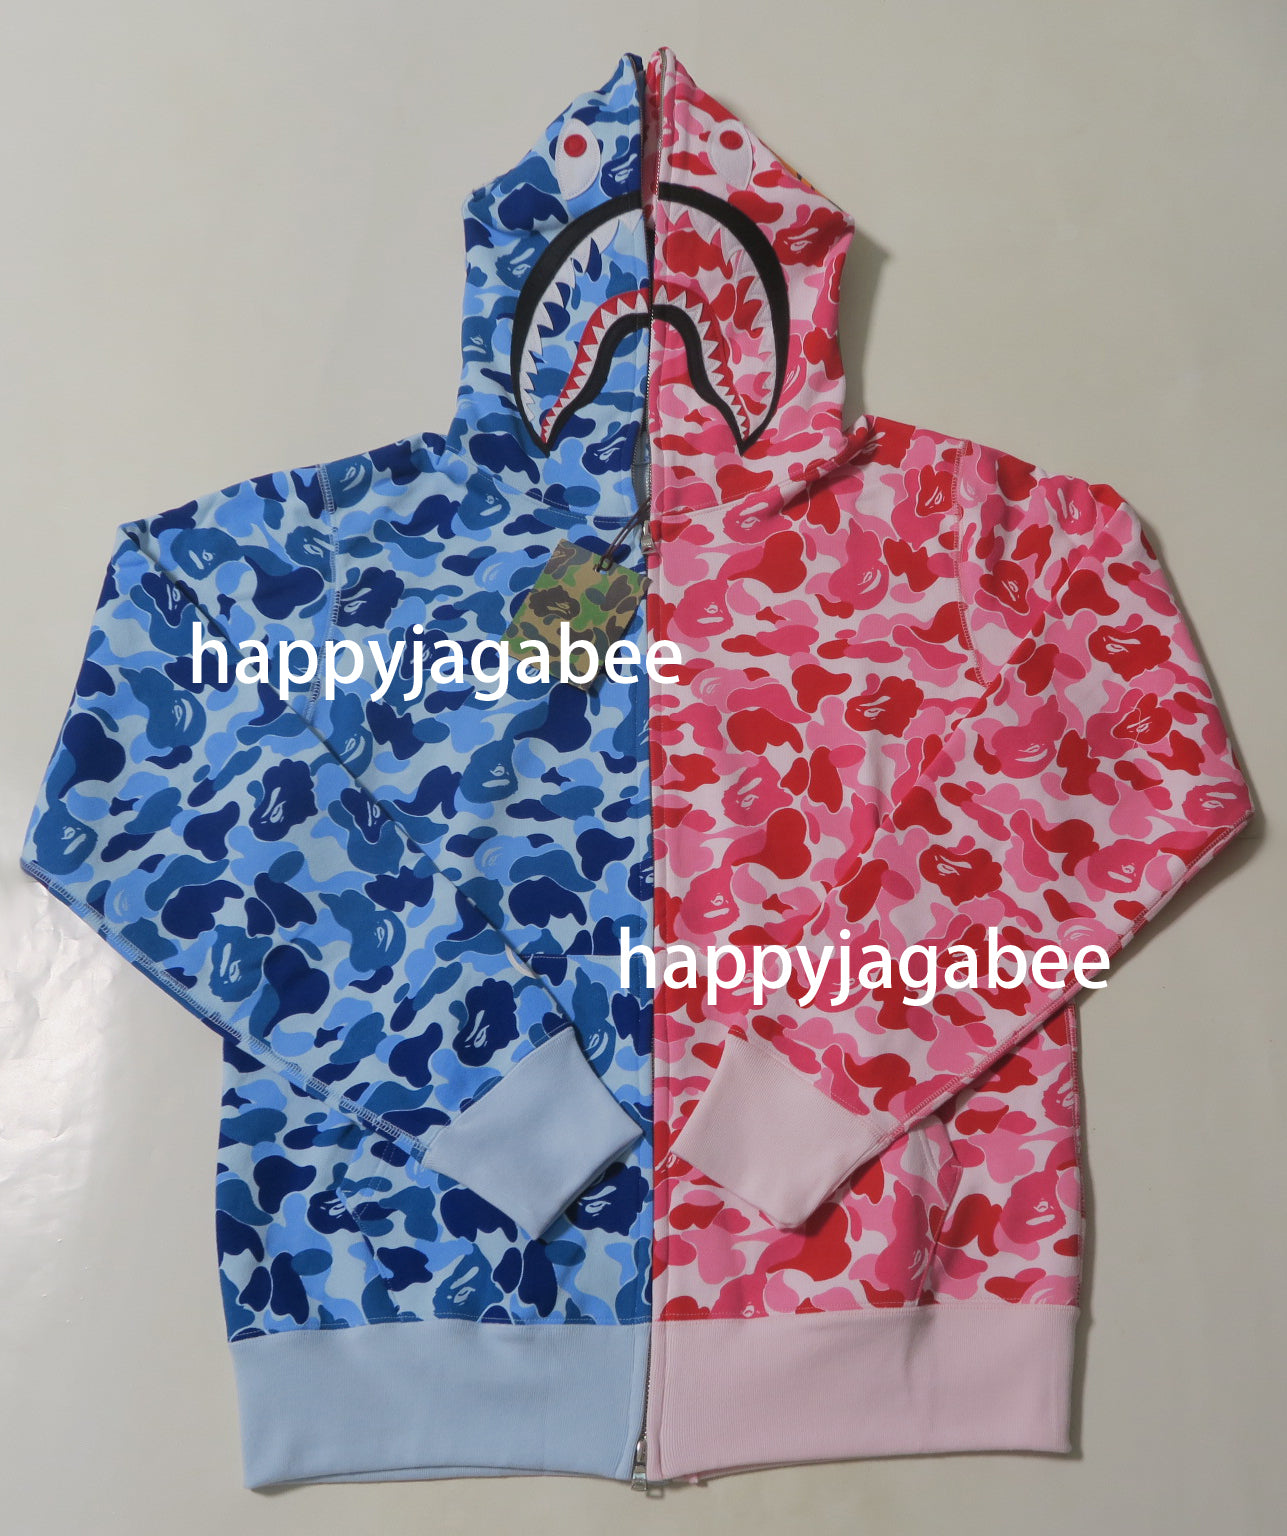 pink abc bape hoodie